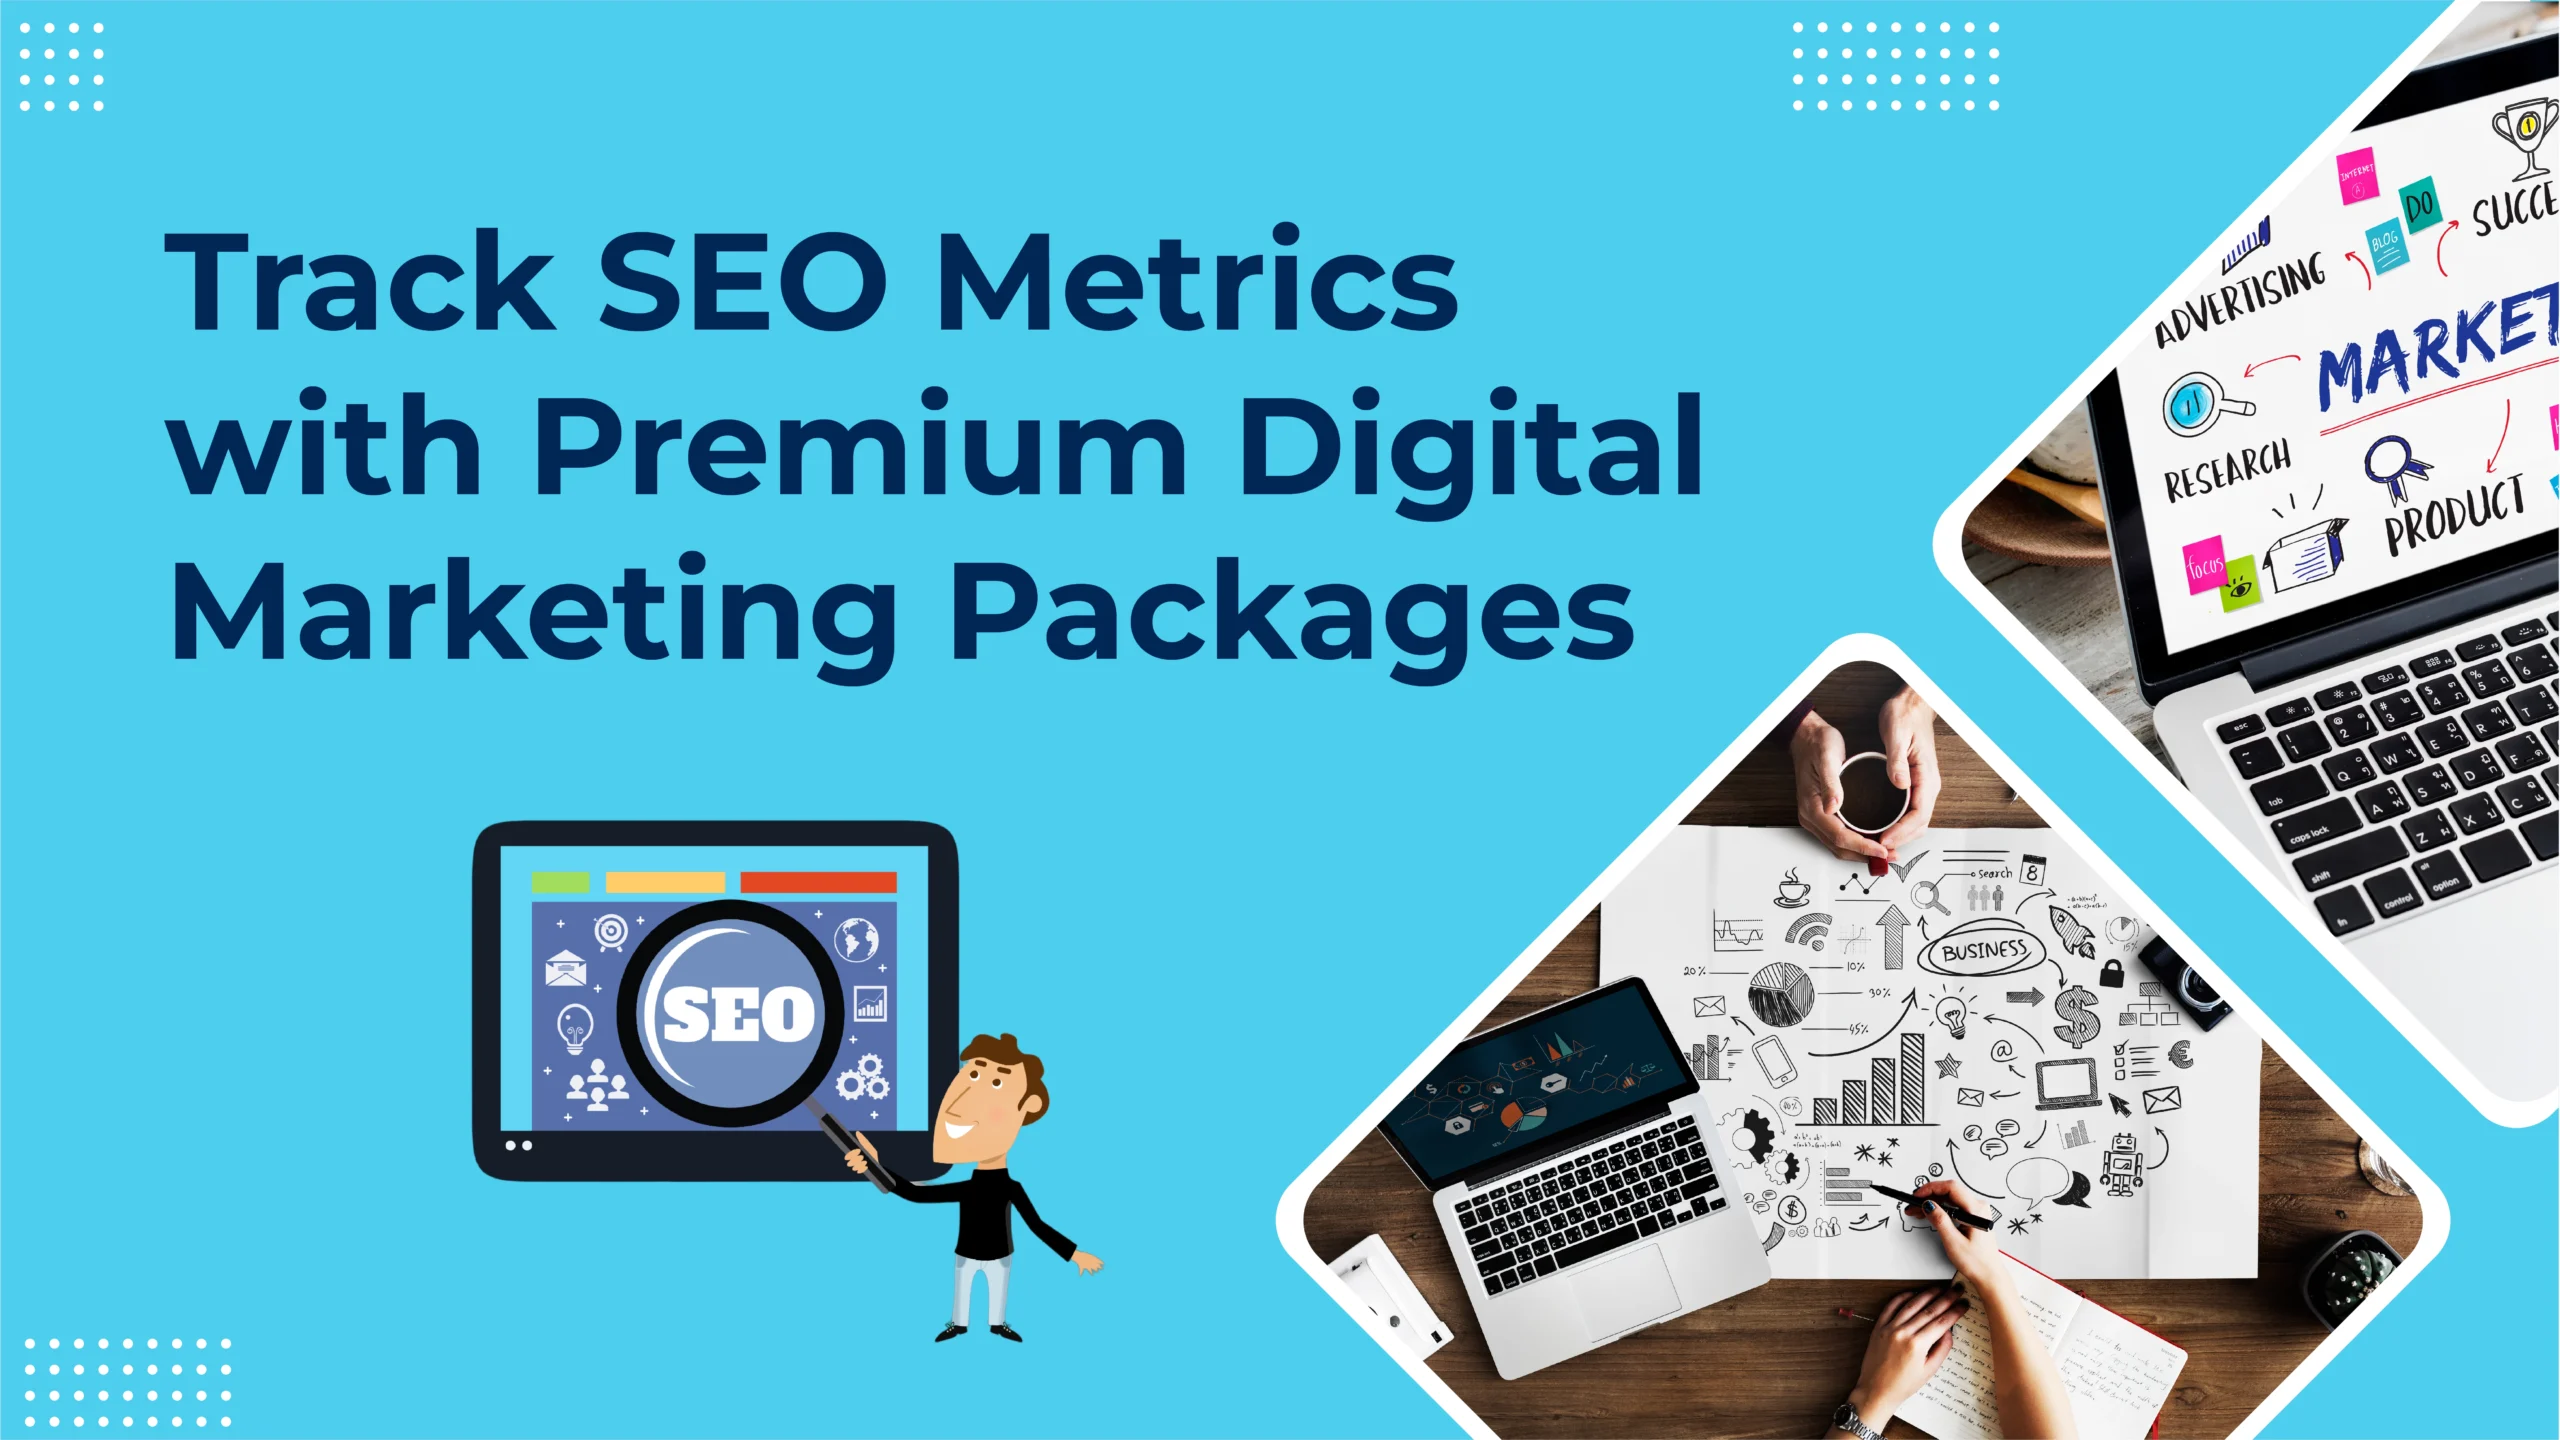 Track SEO Metrics with Premium Digital Marketing Packages